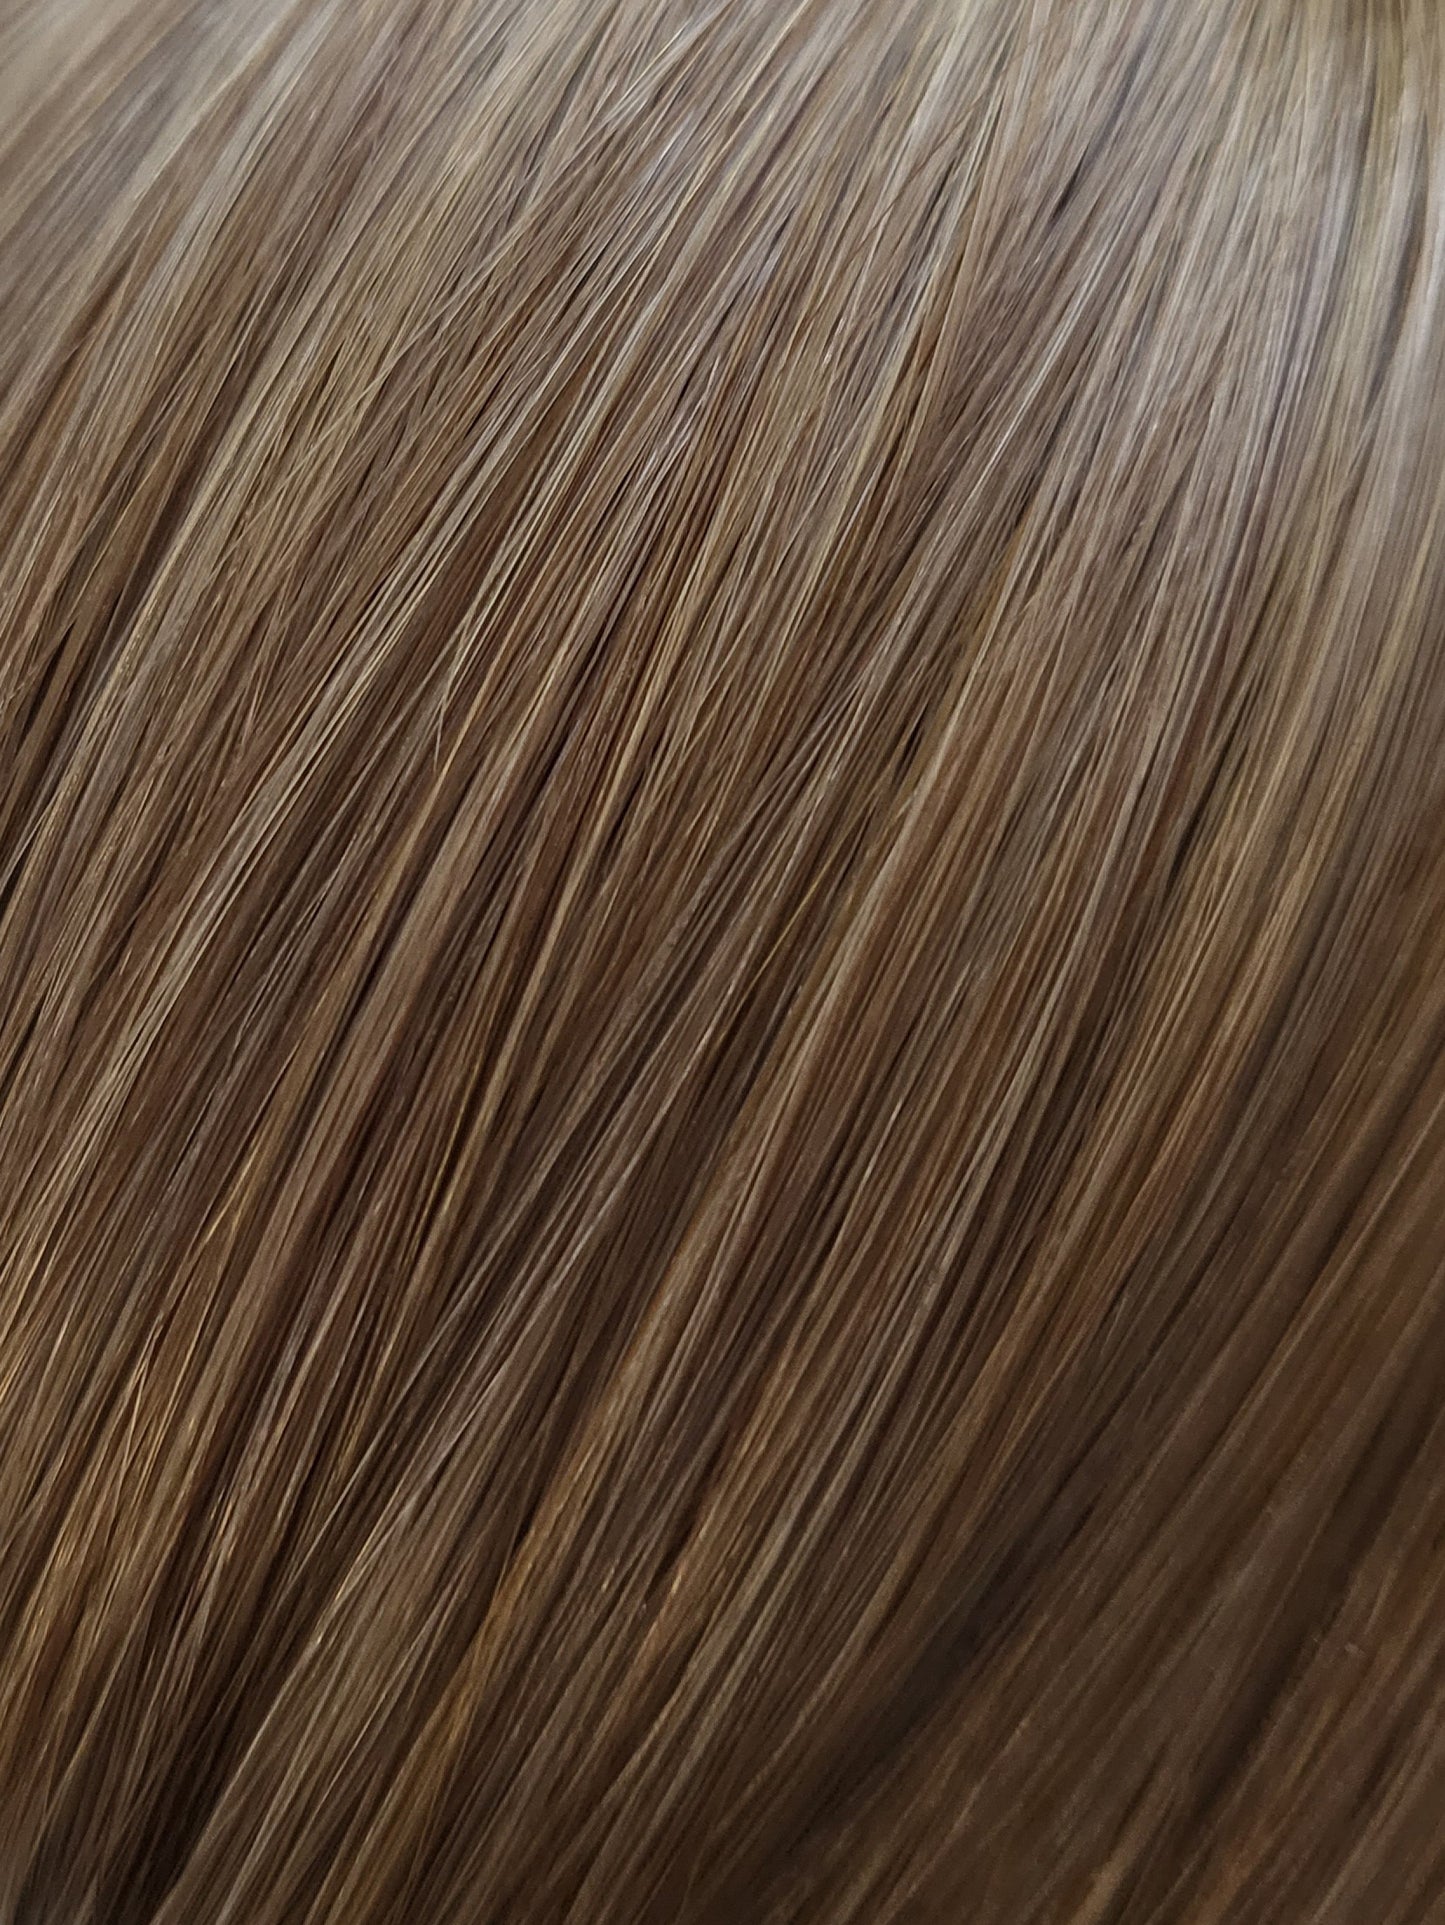 WEFT HAIR-10 Dirty Blonde 20 inch